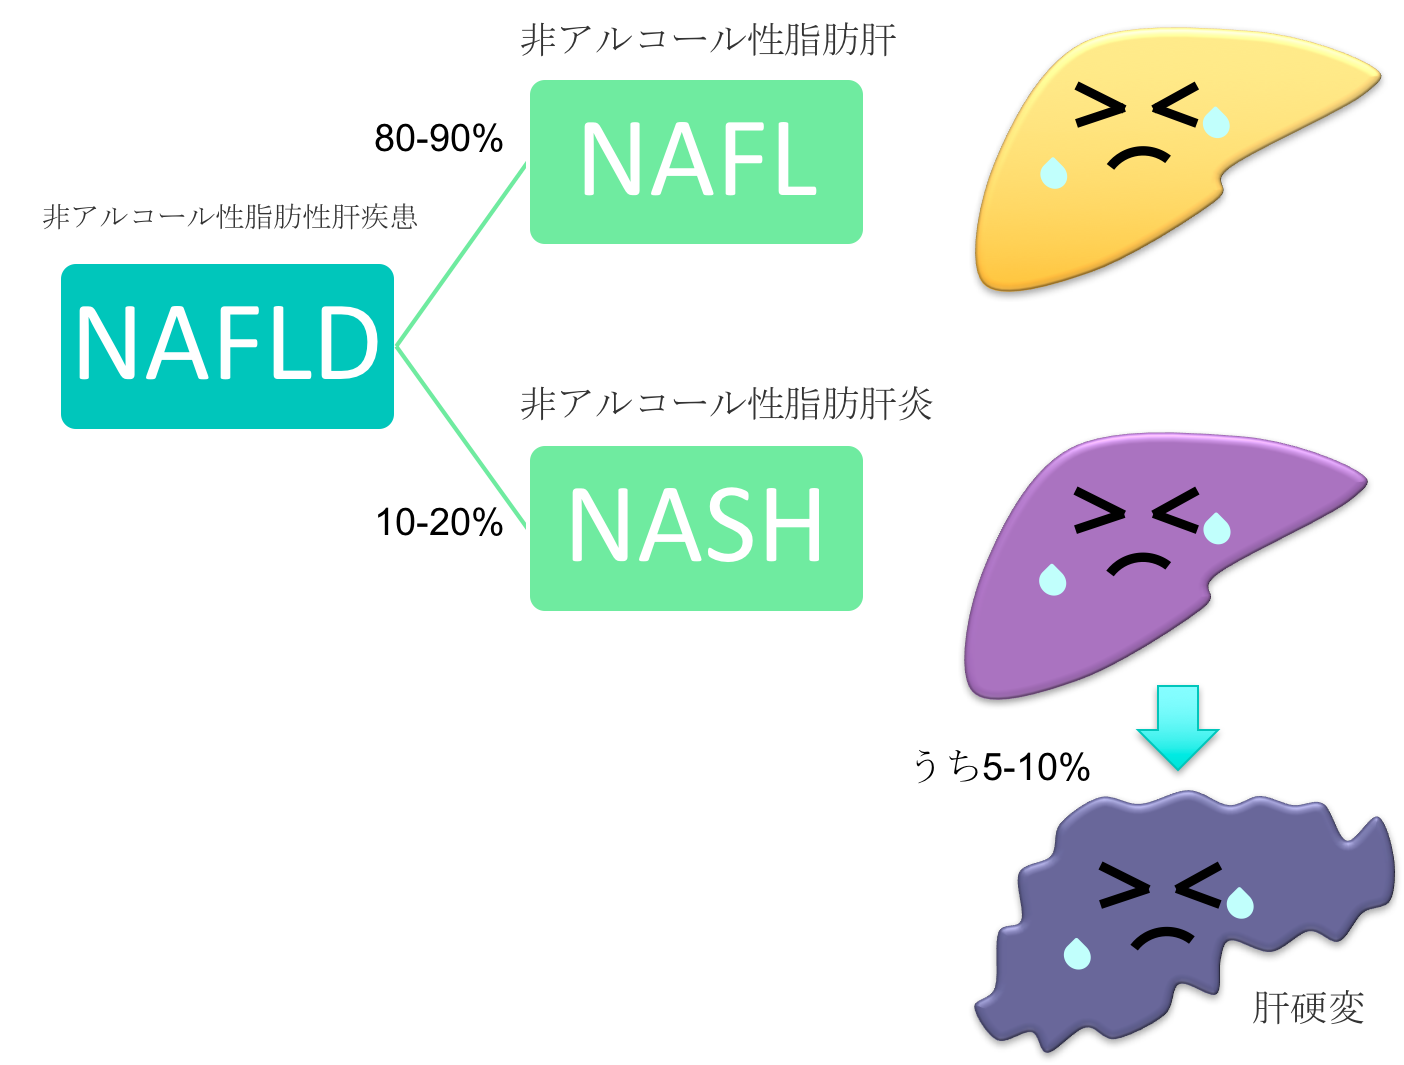 NAFLD NAFL NASH figure